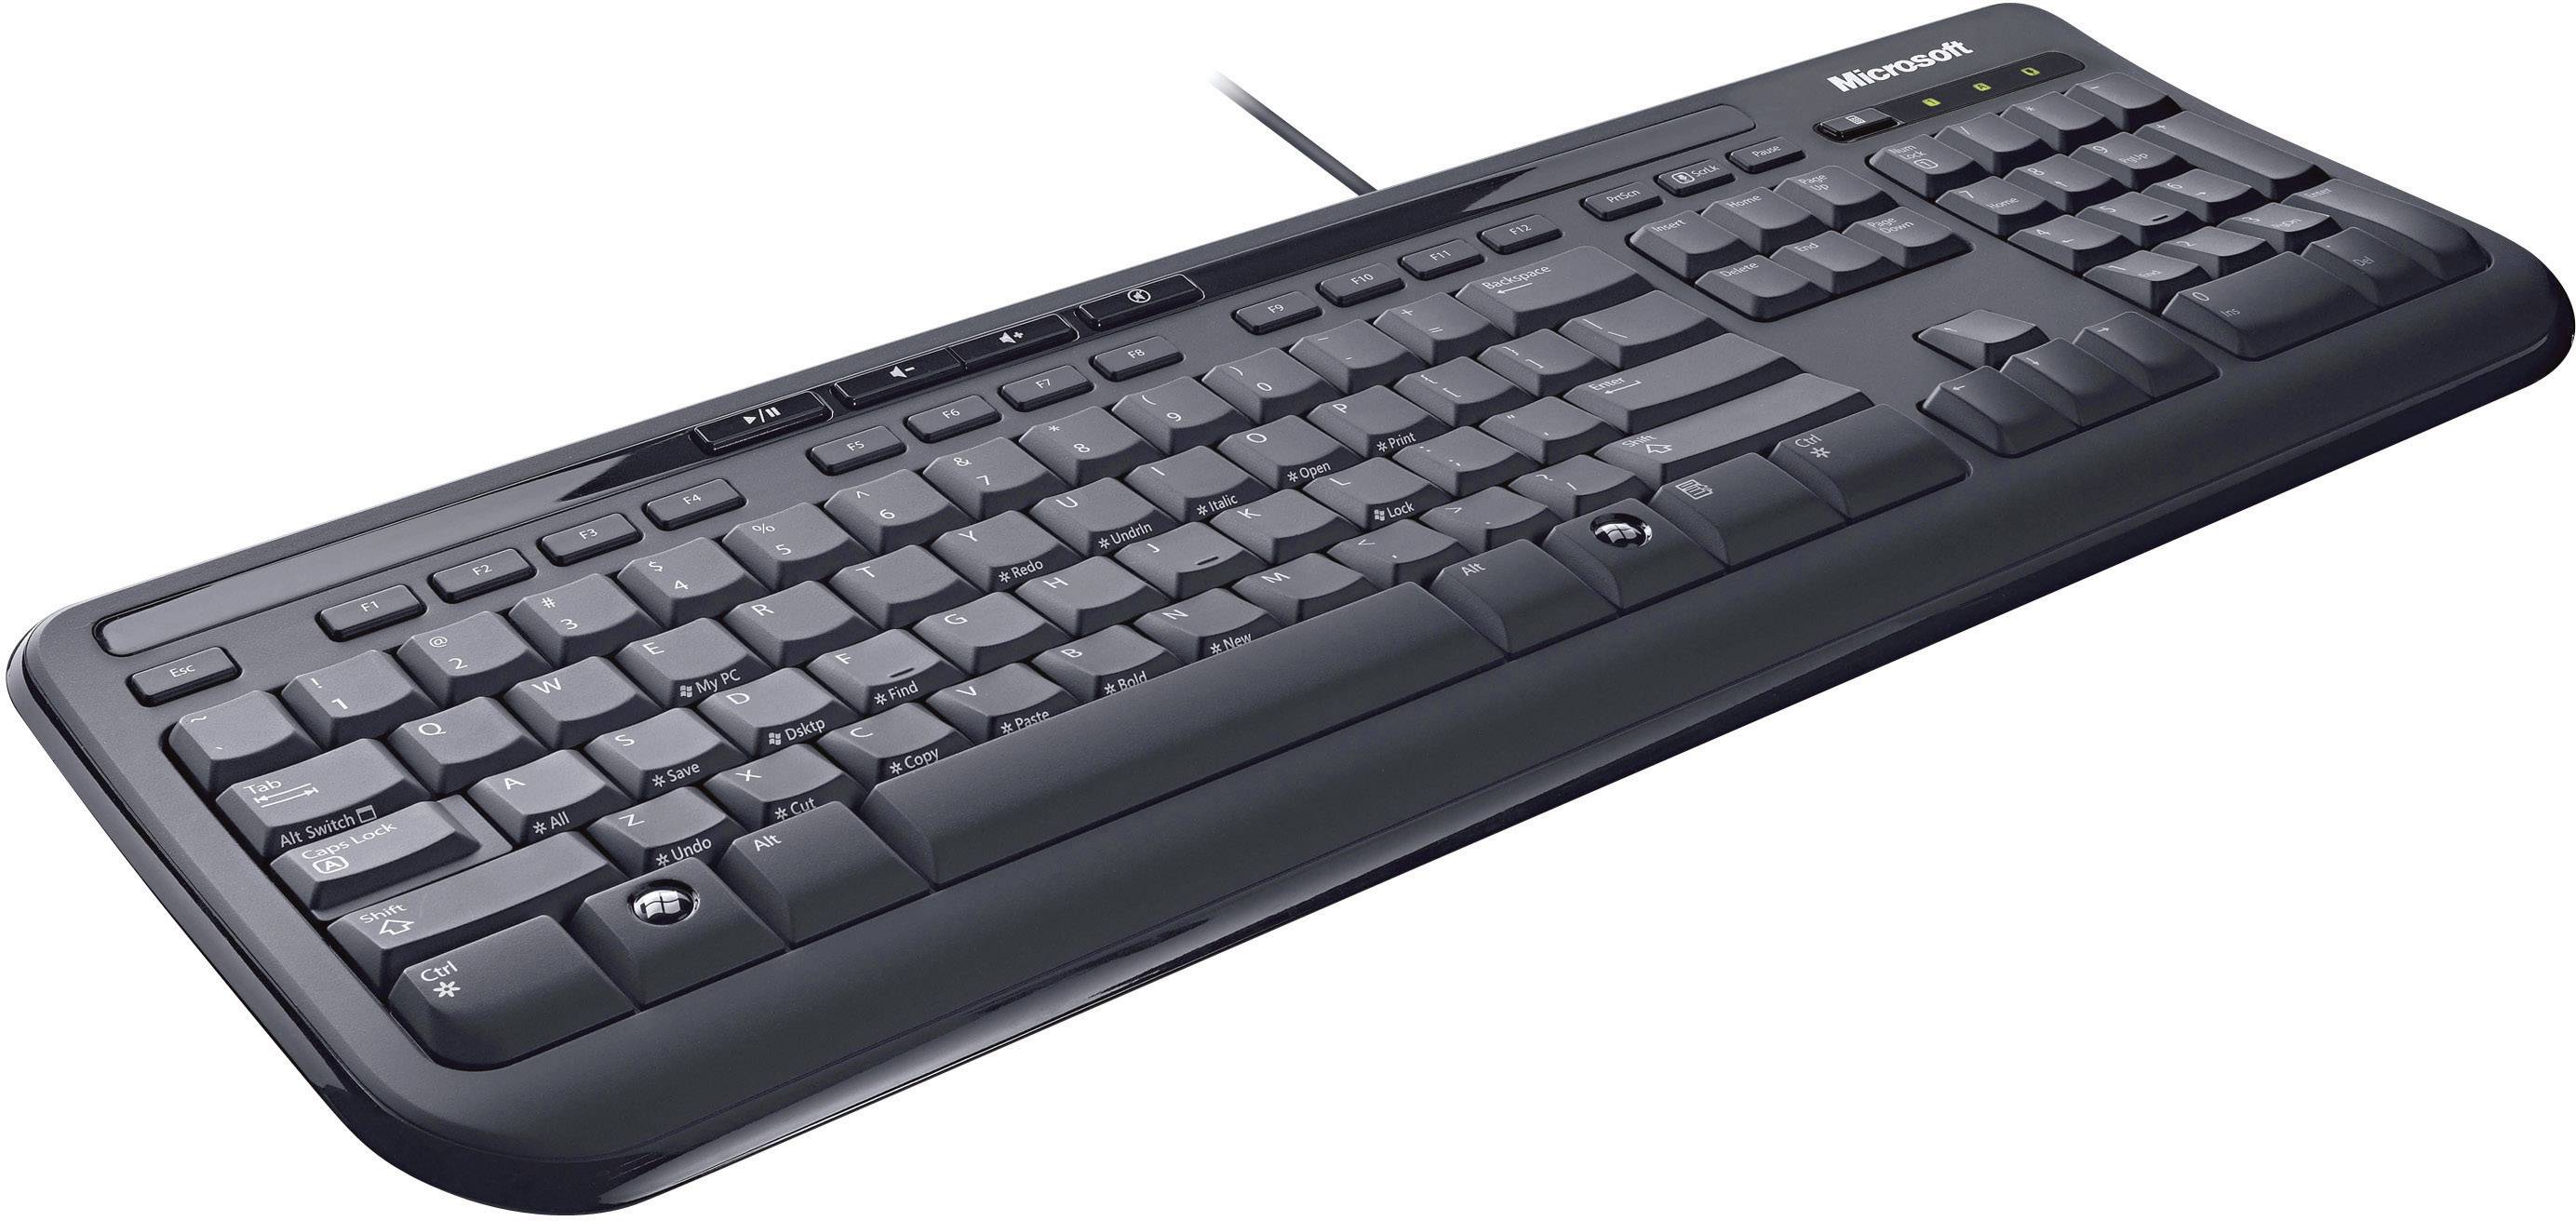 Microsoft WIRED KEYBOARD 600 USB Keyboard German, QWERTZ, Windows® Splashproof | Conrad.com